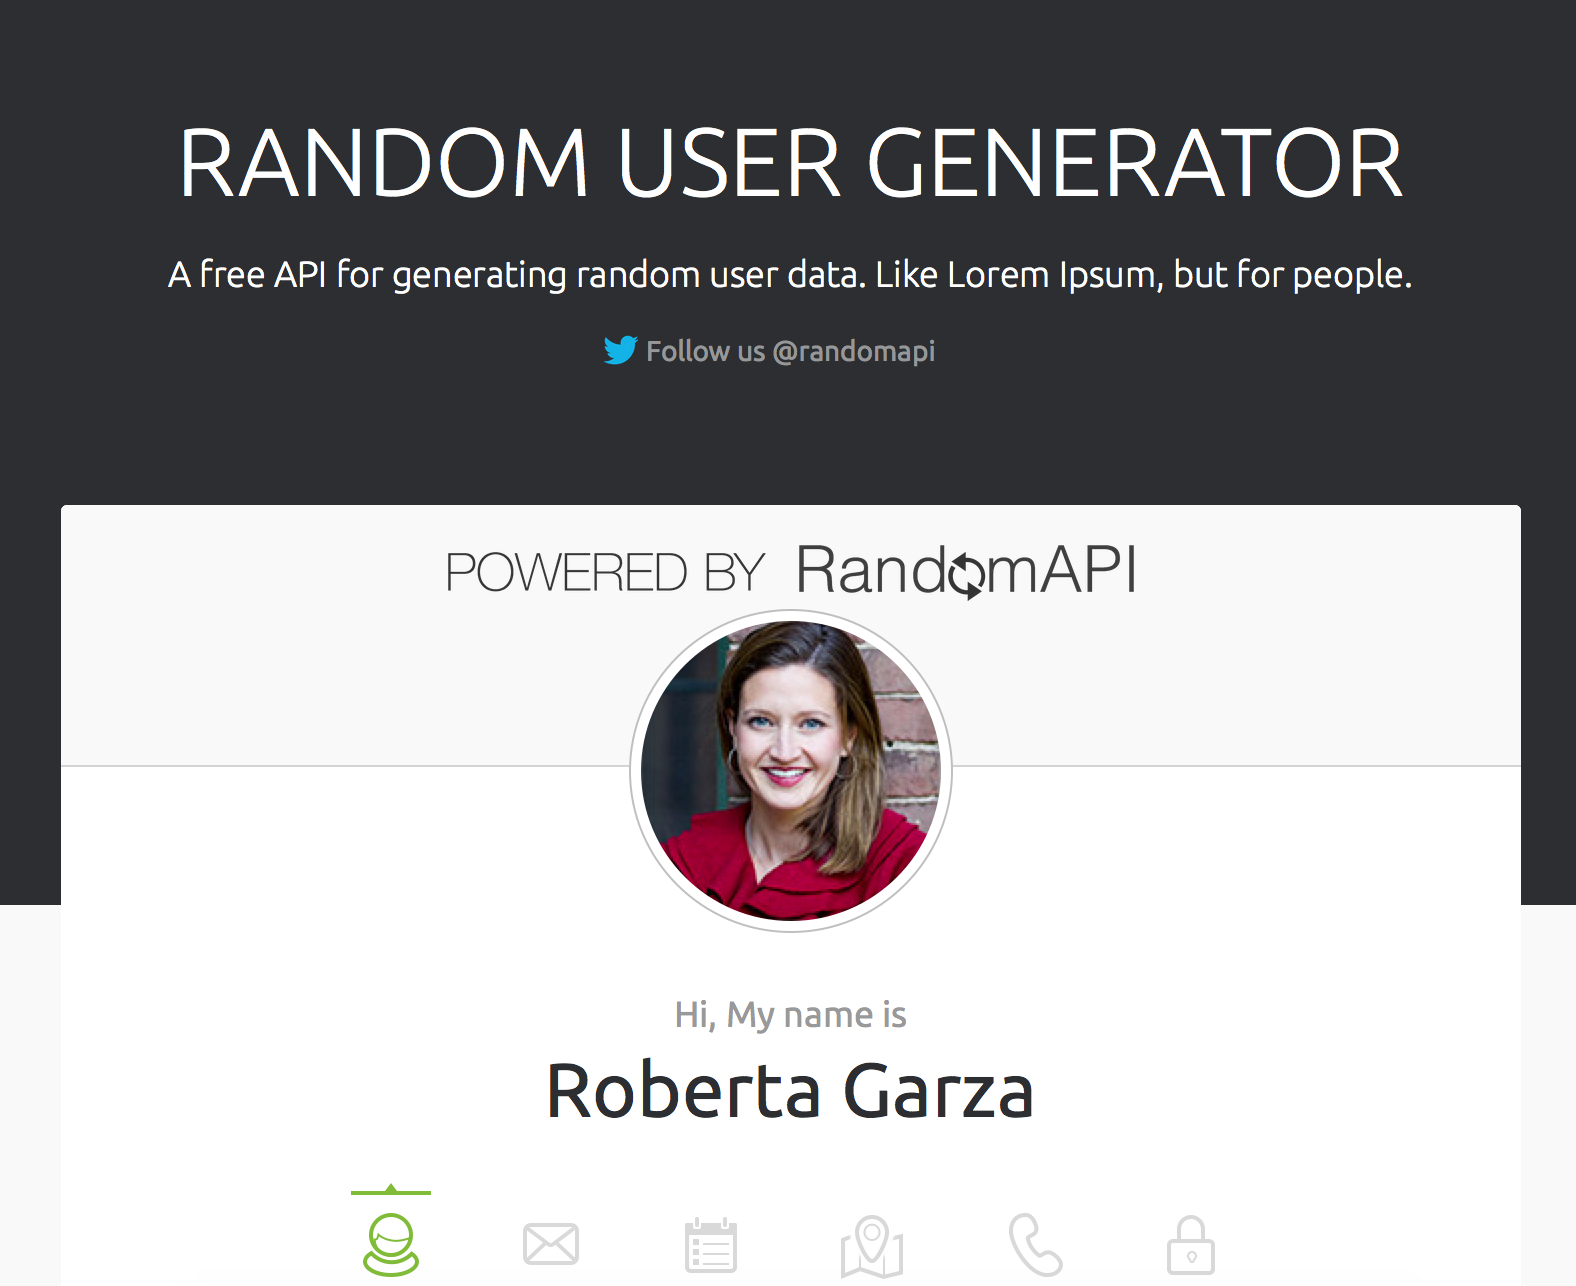 The Random User Generator